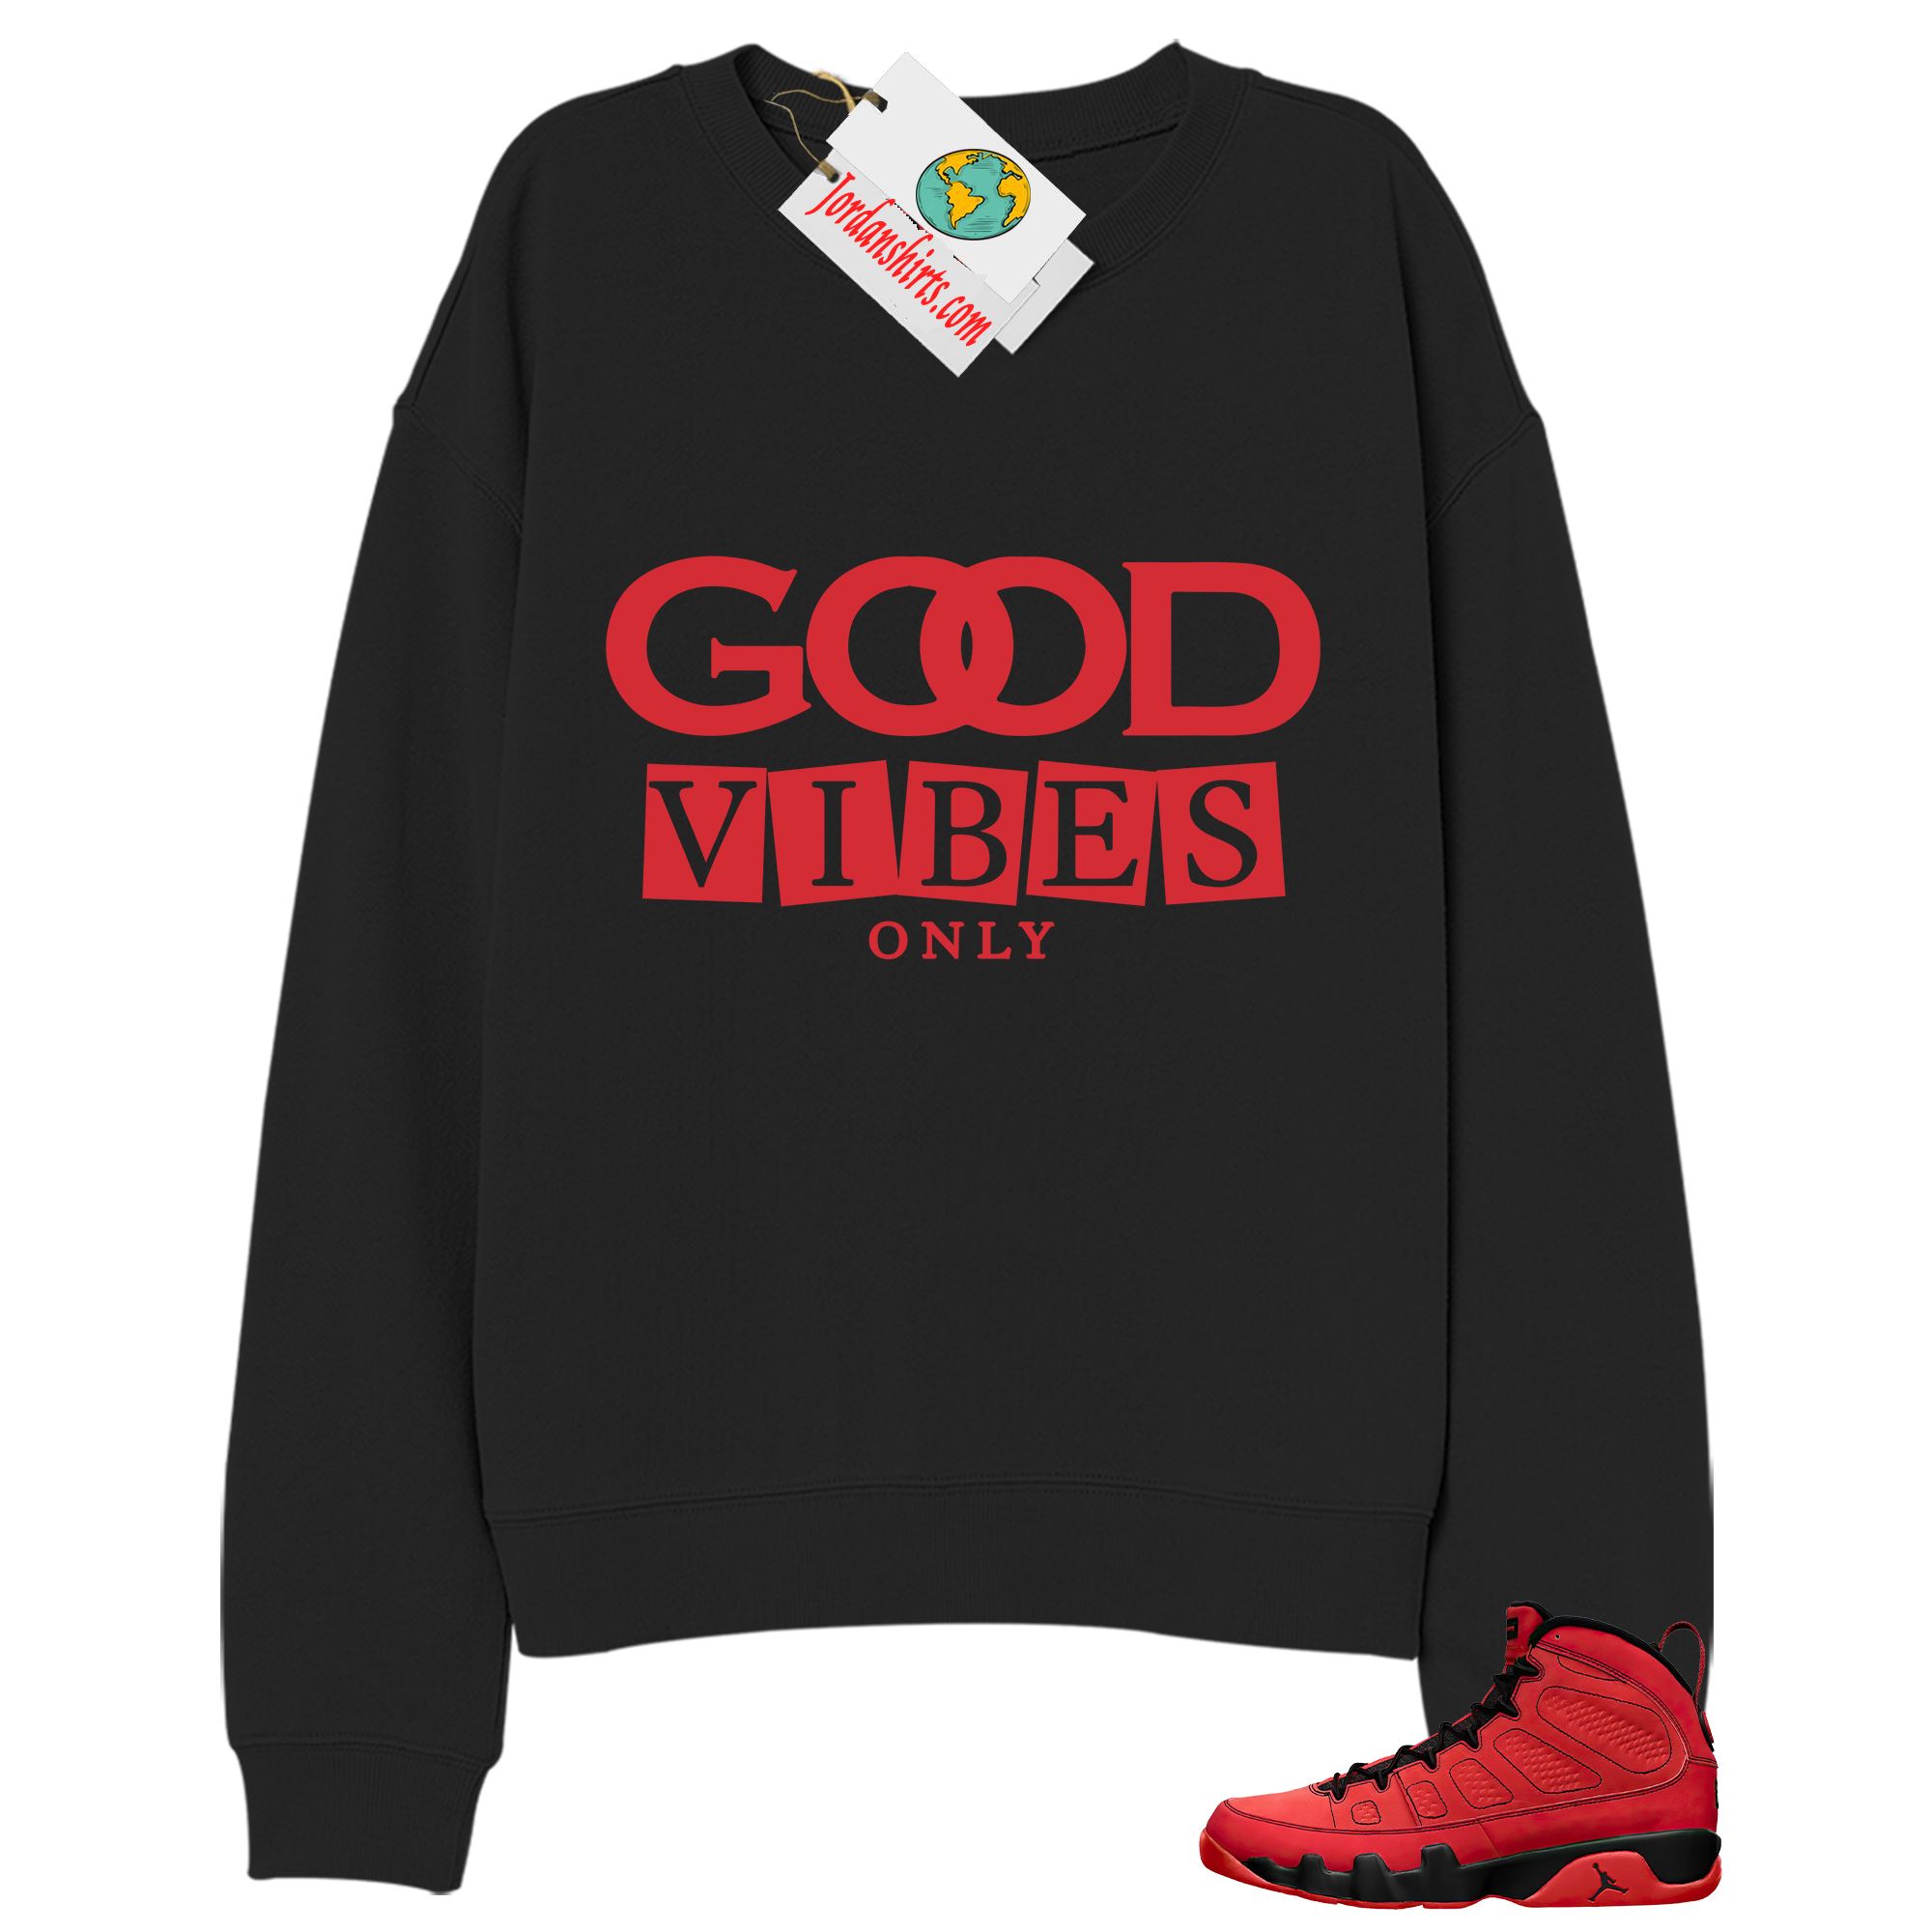 Jordan 9 Sweatshirt, Good Vibes Only Black Sweatshirt Air Jordan 9 Chile Red 9s Size Up To 5xl